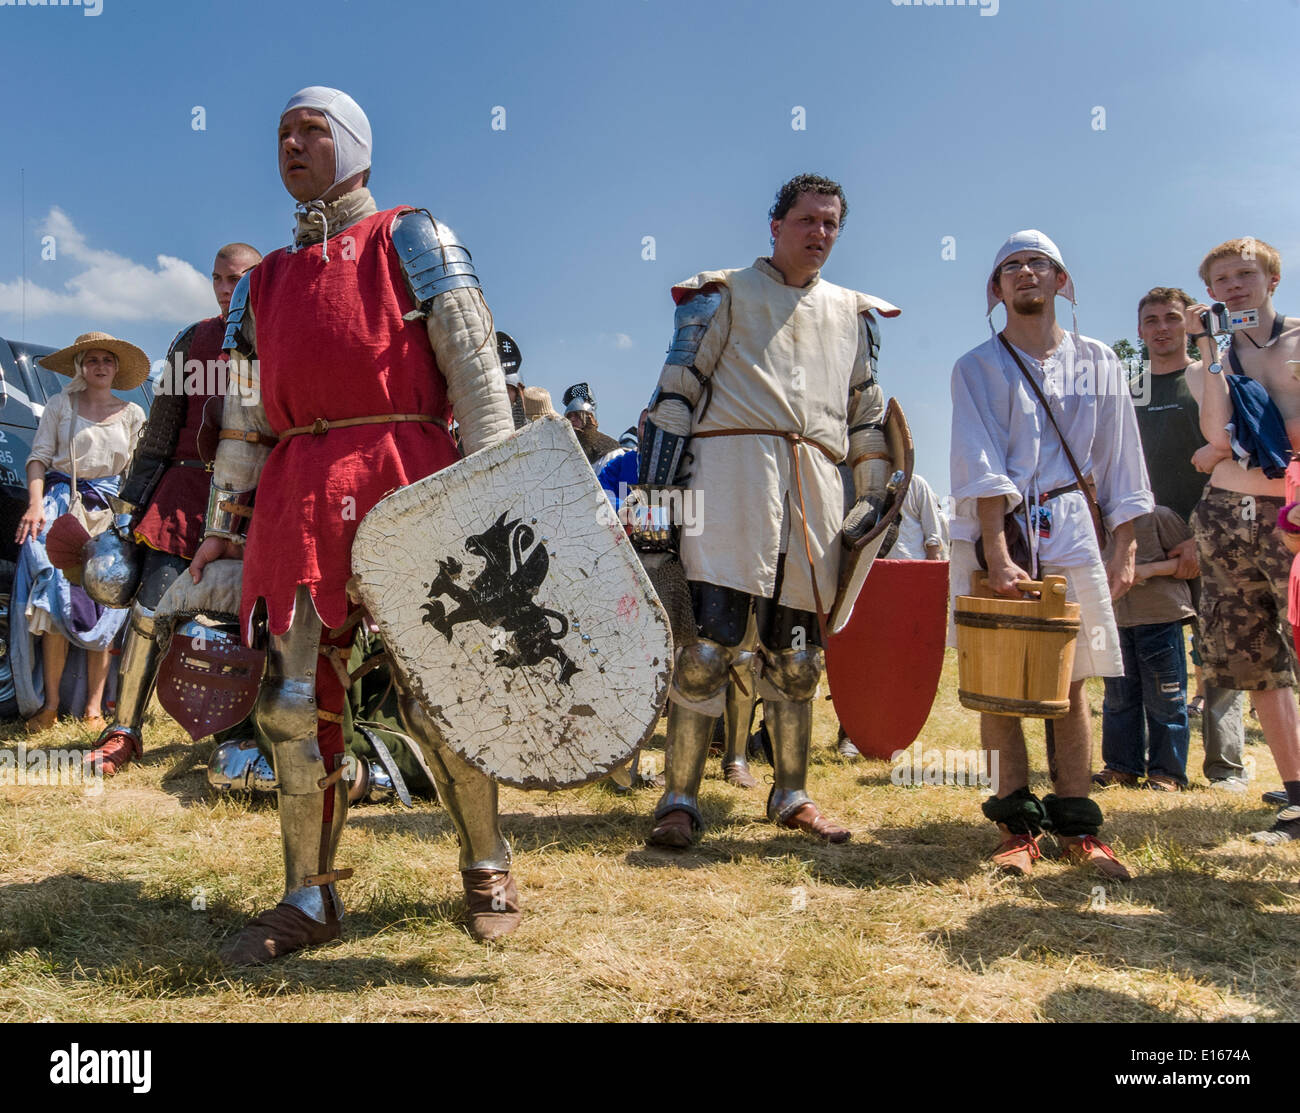 Reenactors preparing to recreate Battle of Grunwald of 1410, near village of Grunwald, Poland Stock Photo